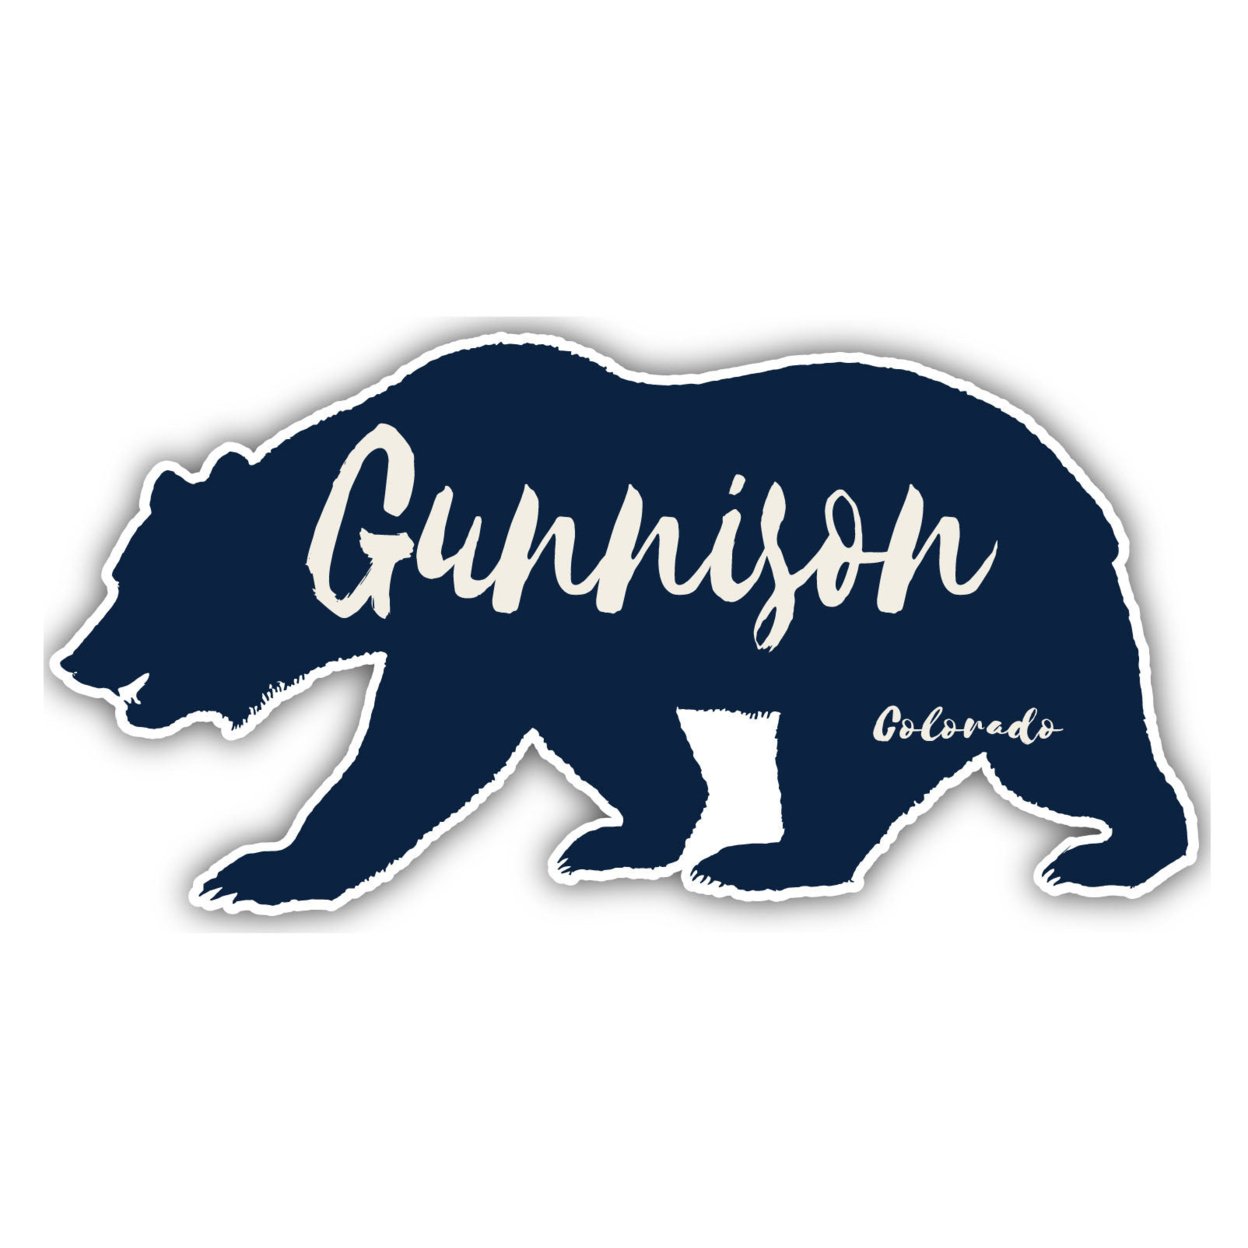 Gunnison Colorado Souvenir Decorative Stickers (Choose Theme And Size) - Single Unit, 8-Inch, Tent